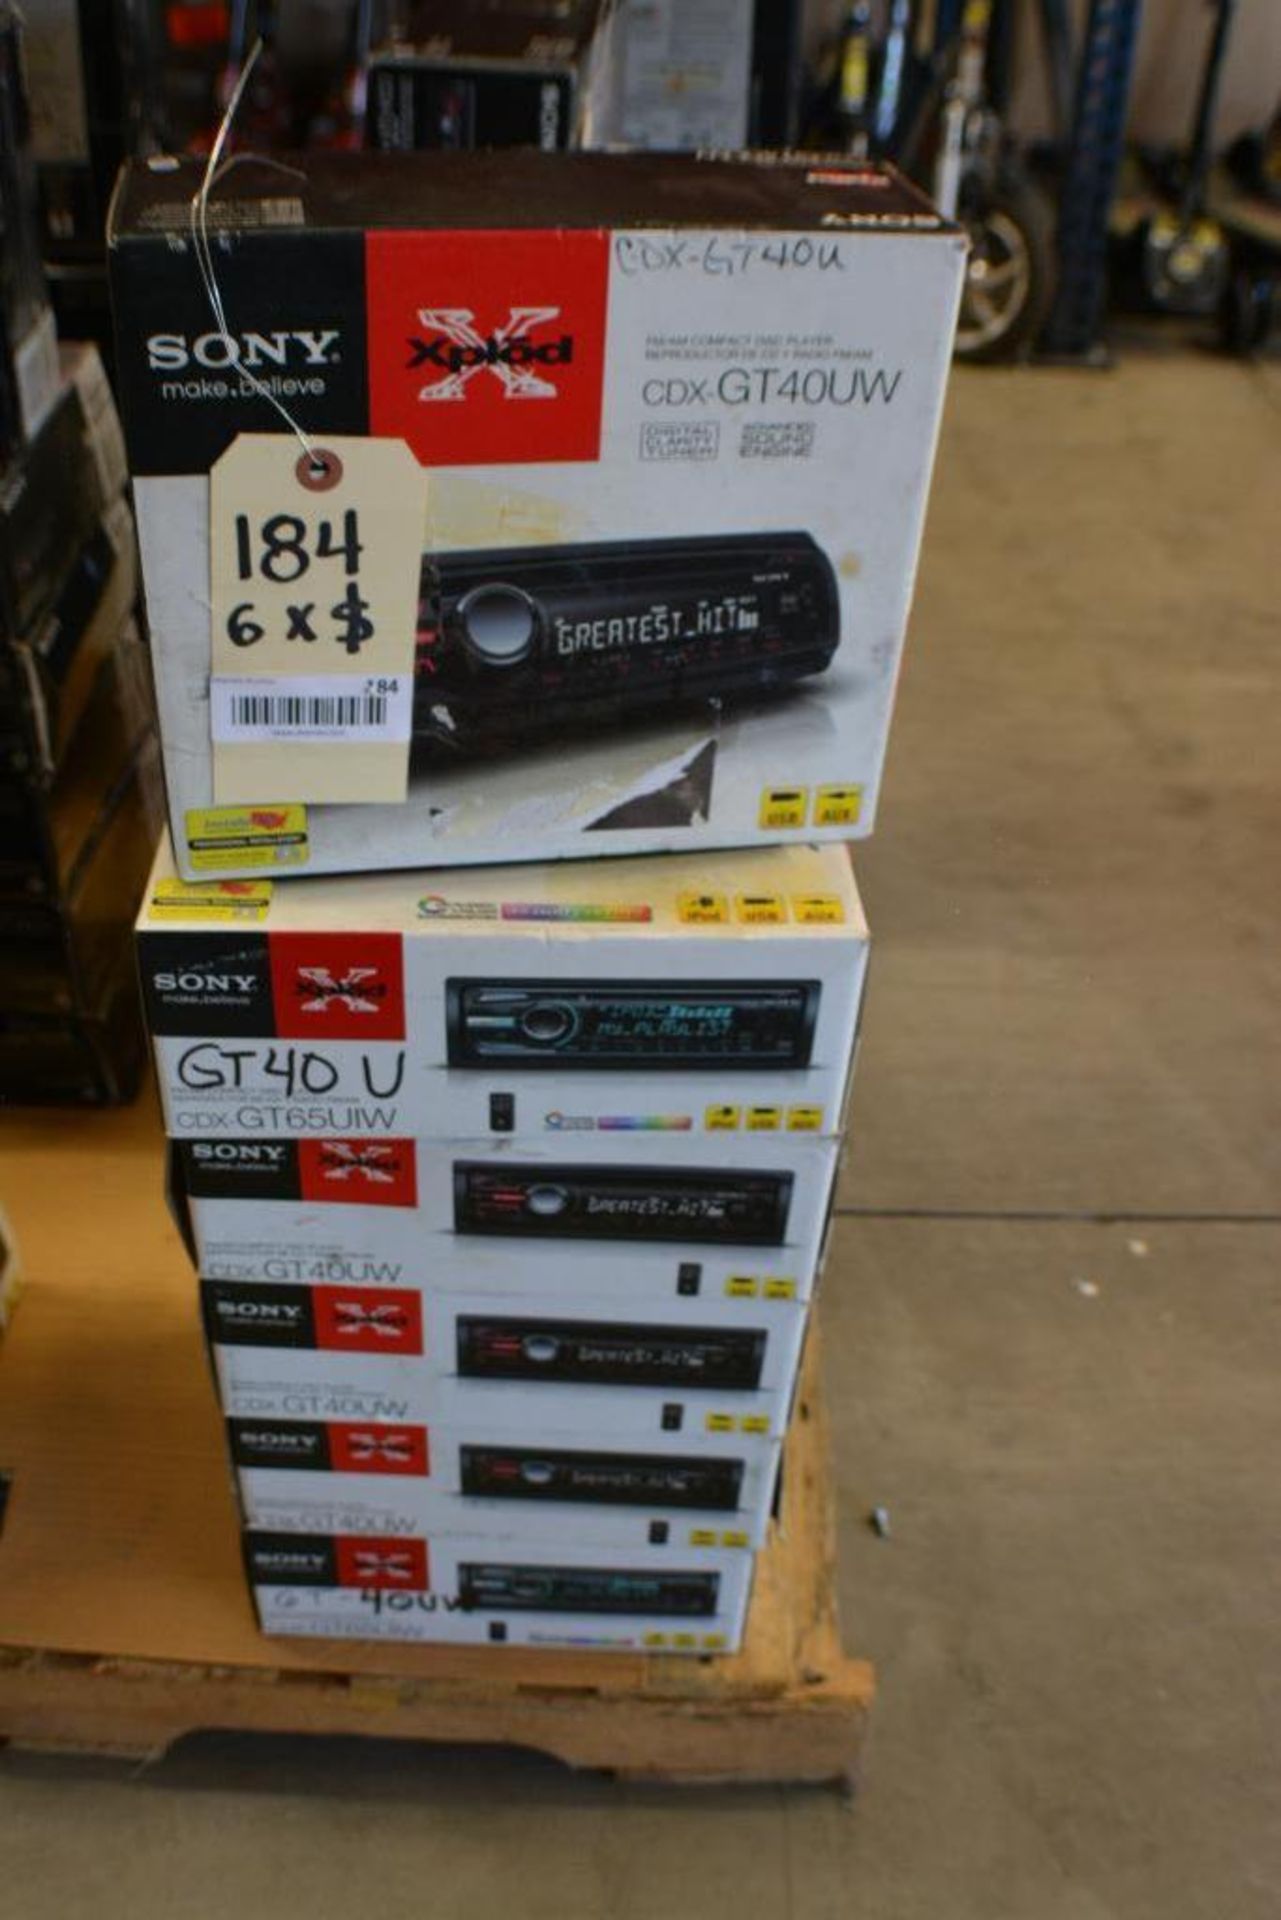 Sony Car Stereo Model CDX-GT40U - Car - CD receiver - Xplod - in-dash - Full-DIN. (Some Stereos not